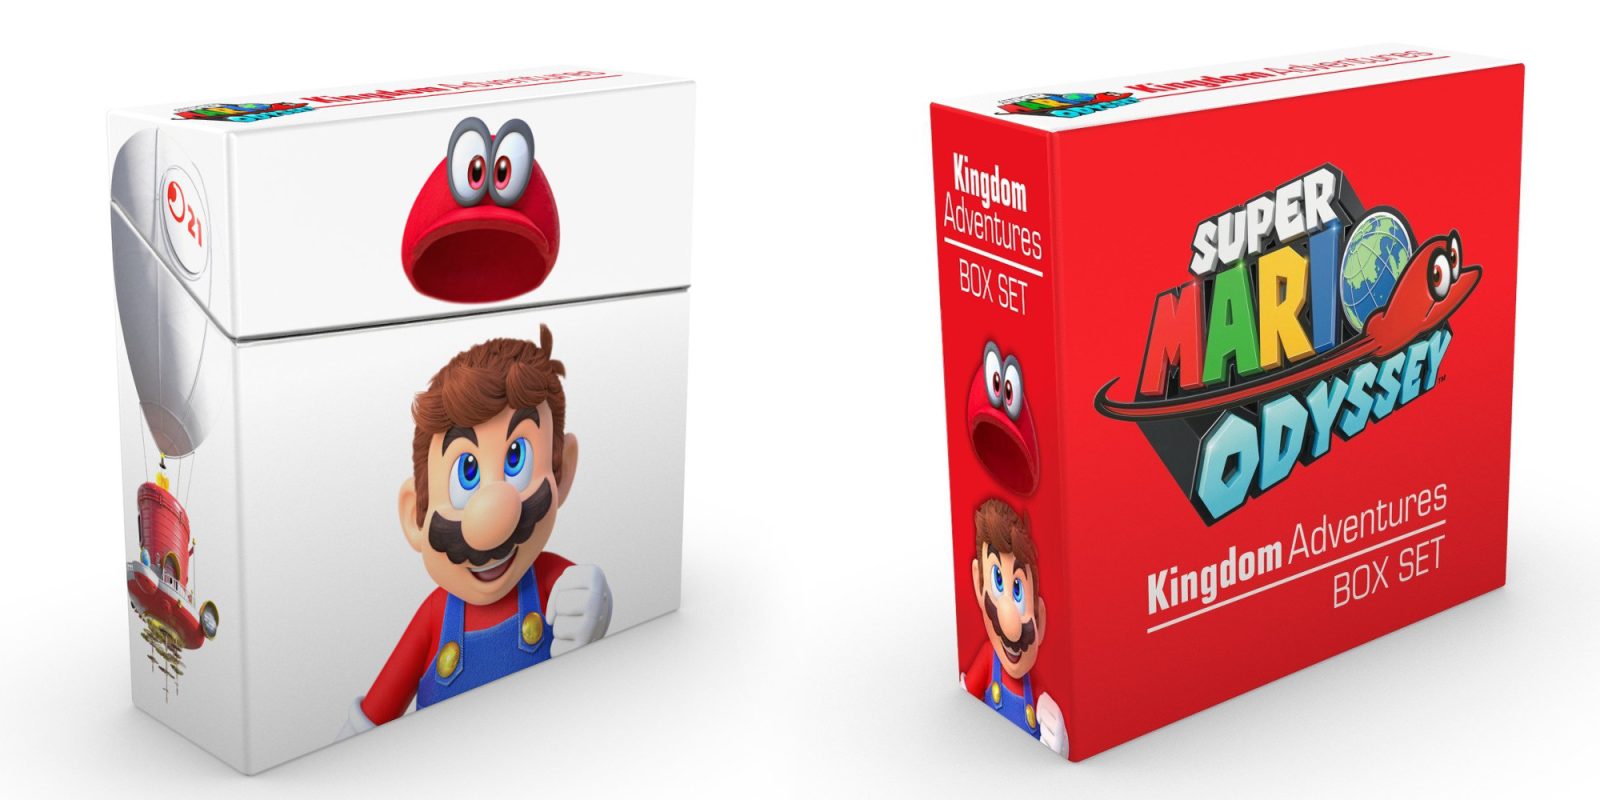 Flipboard: The Super Mario Odyssey Adventures Box Set hits the Amazon